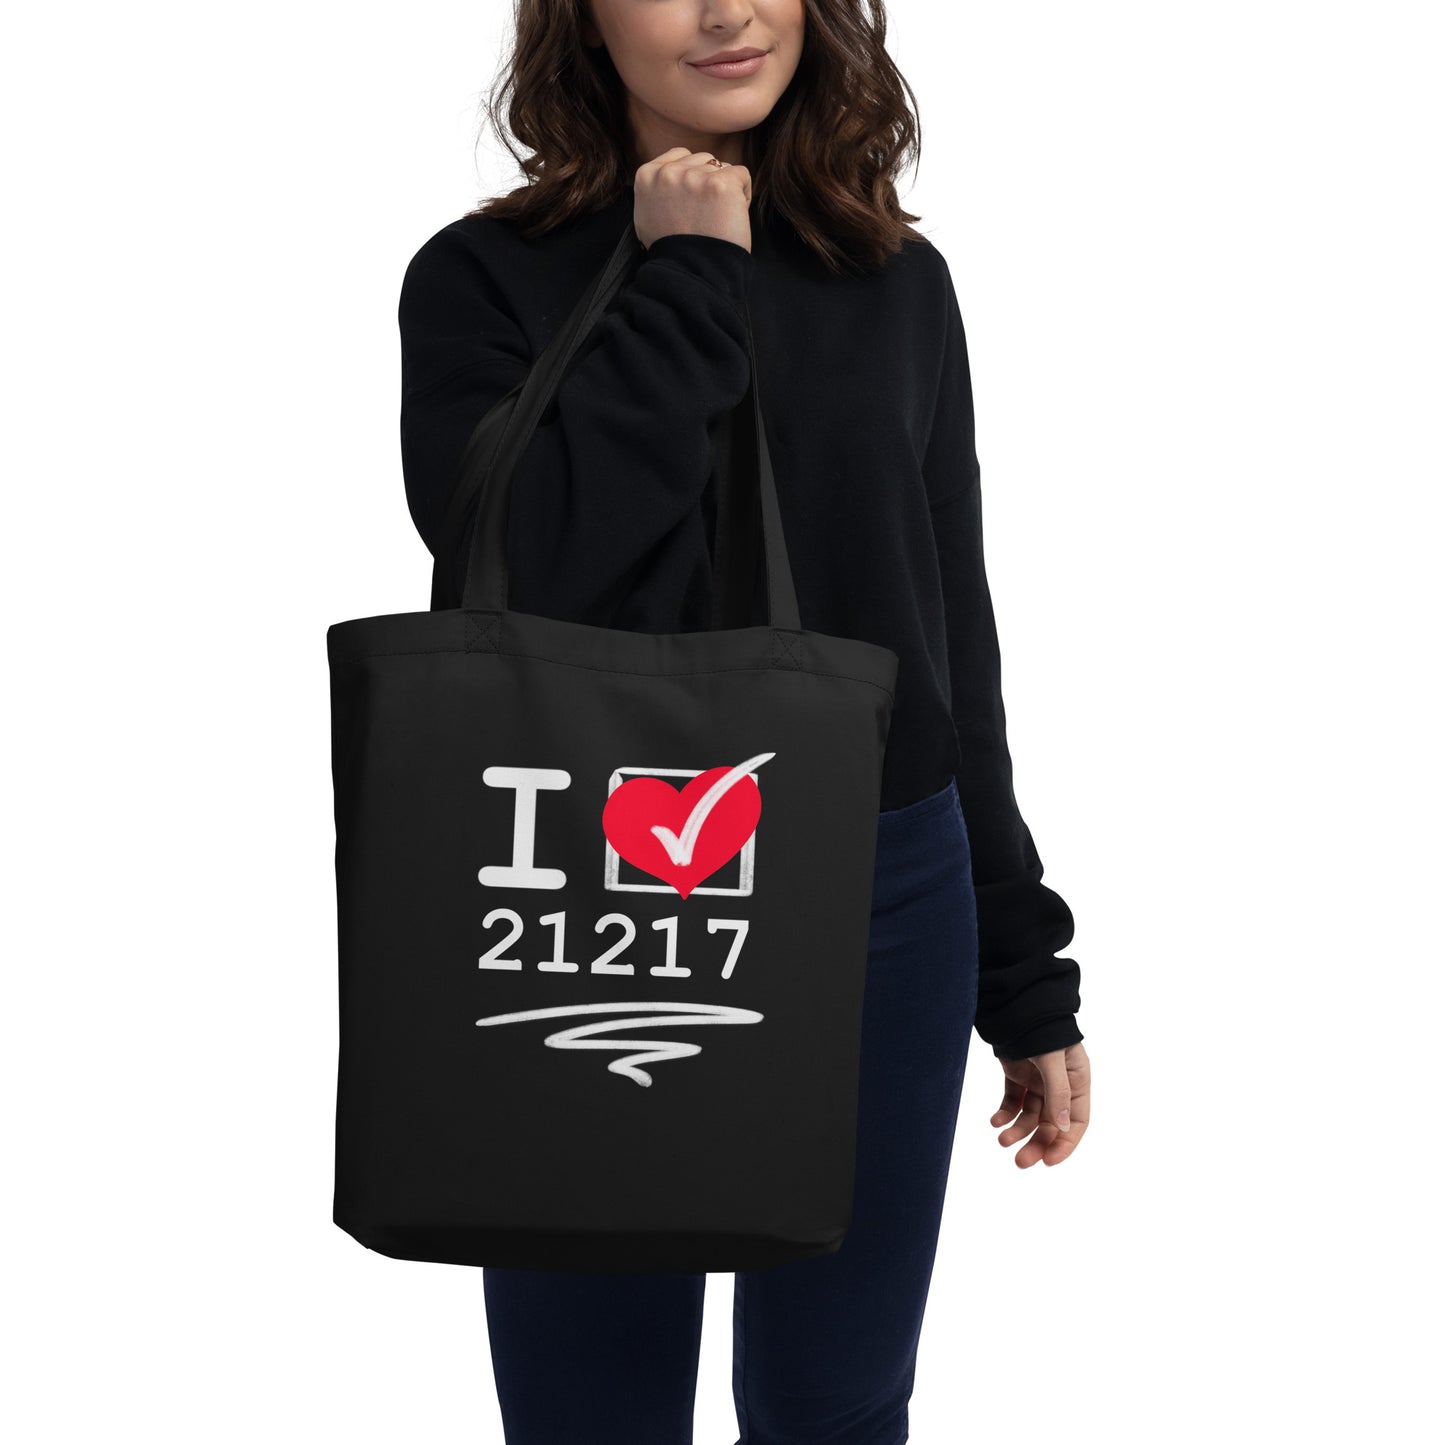 I ❤️ 21217 Tote Bag